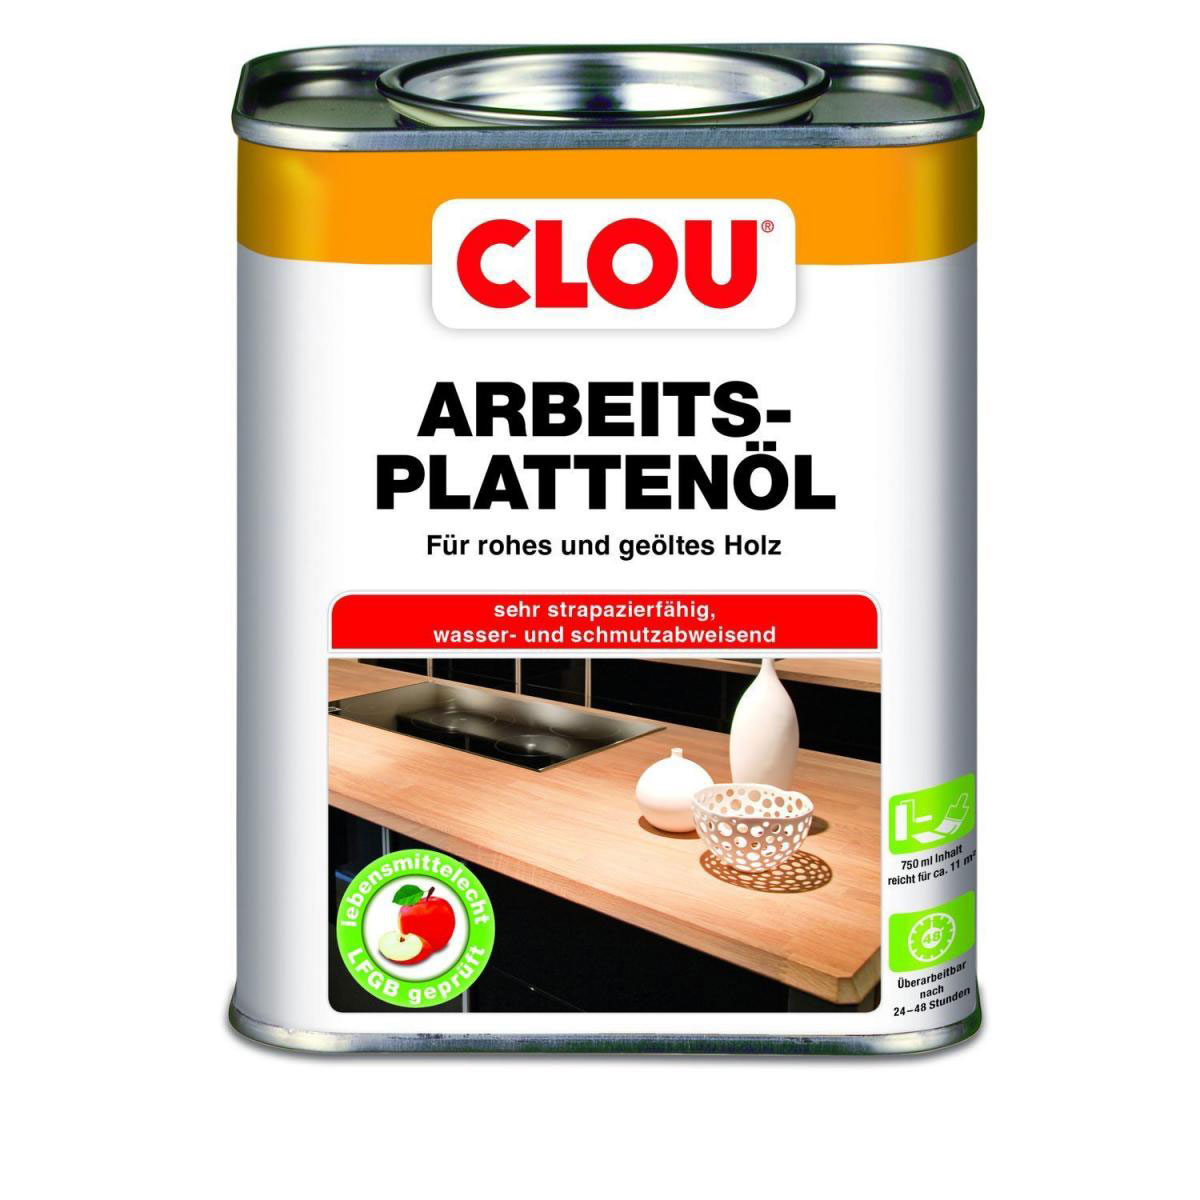 Clou Arbeitsplattenöl, 750 ml